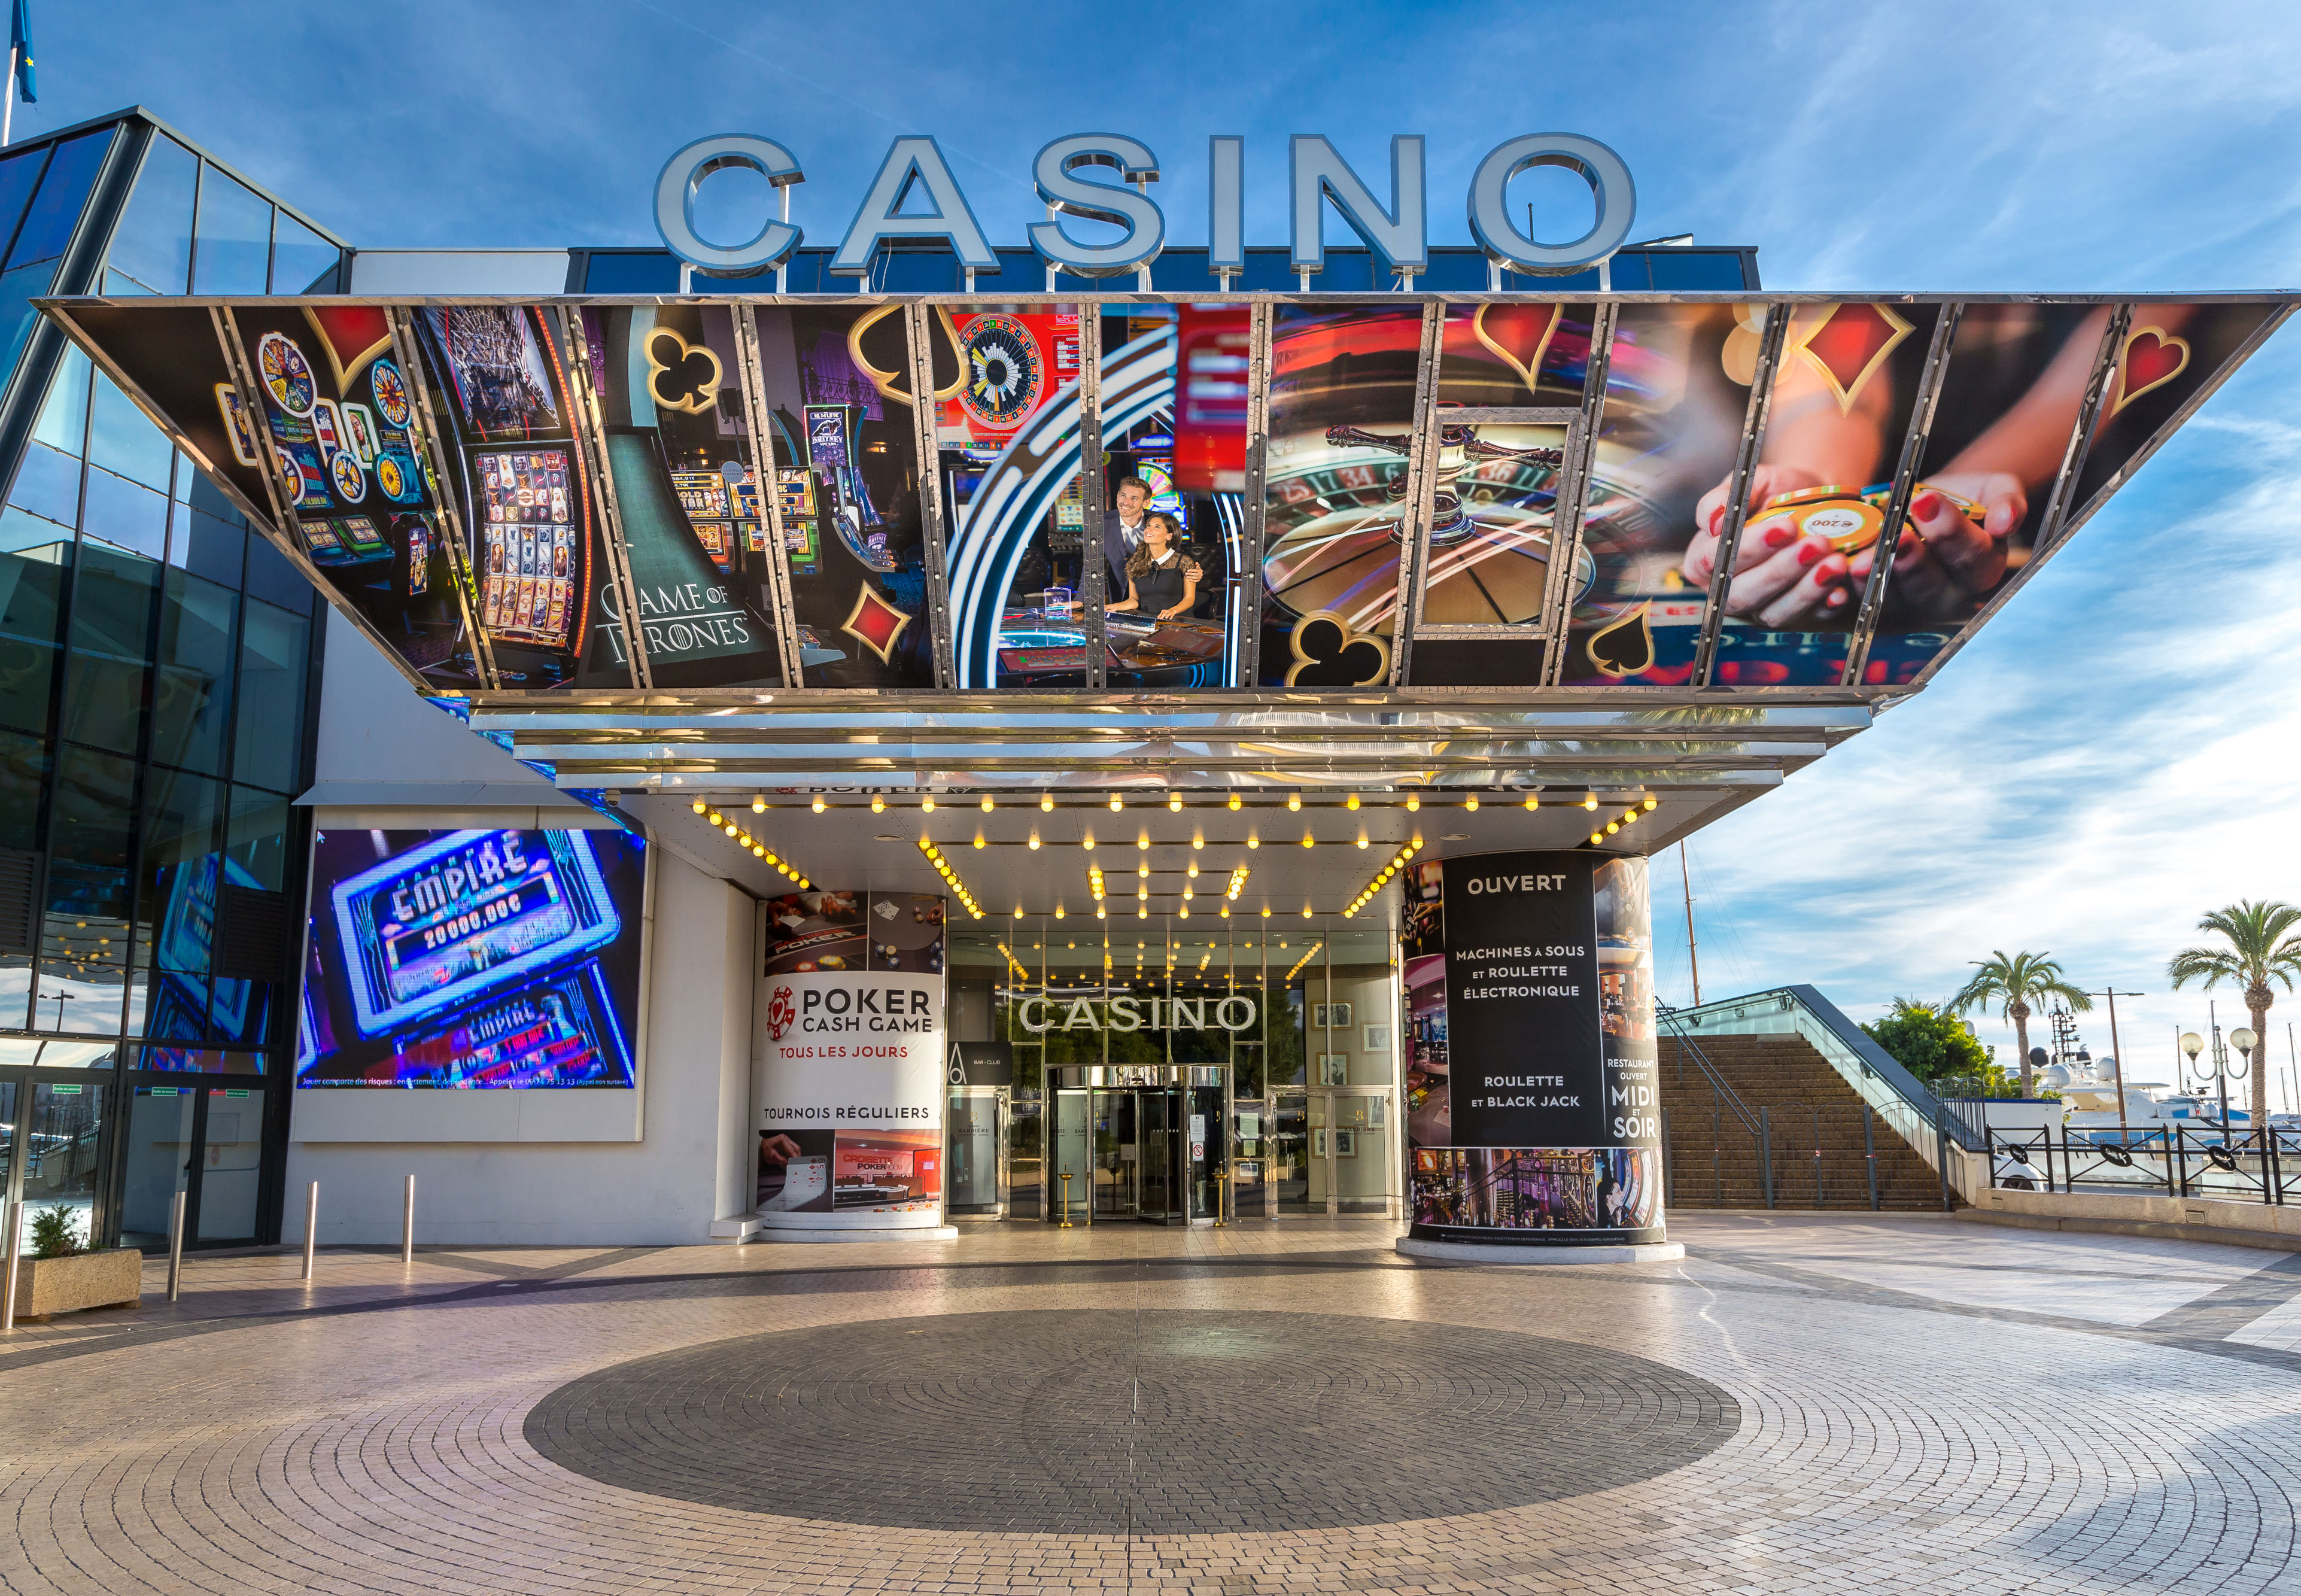 Facade-Casino-Croisette.jpg